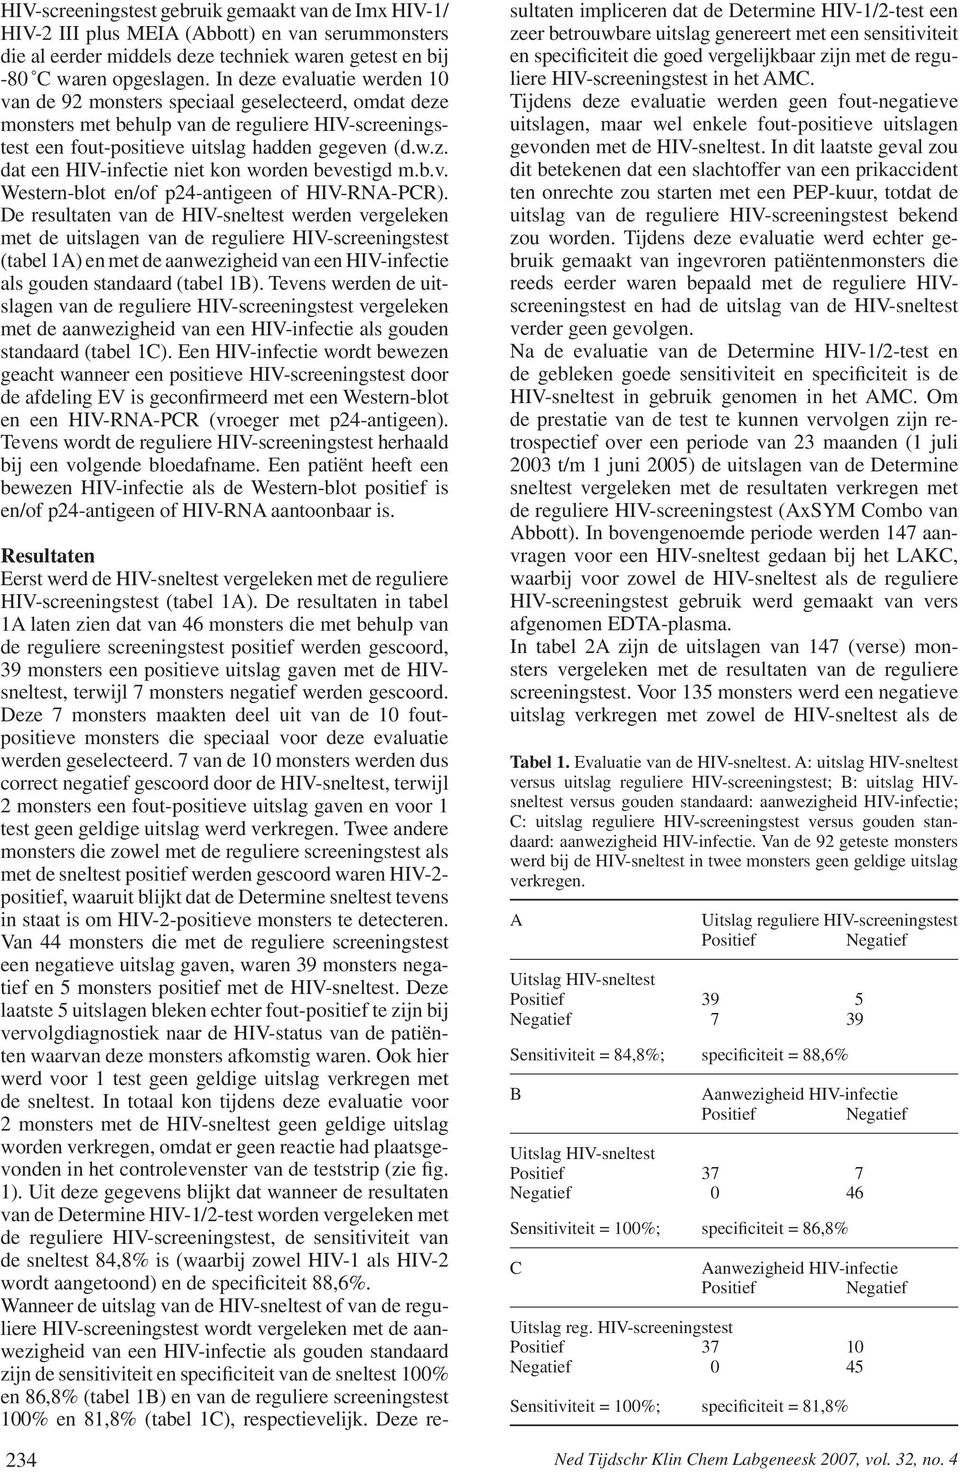 b.v. Western-blot en/of p24-antigeen of HIV-RNA-PCR).